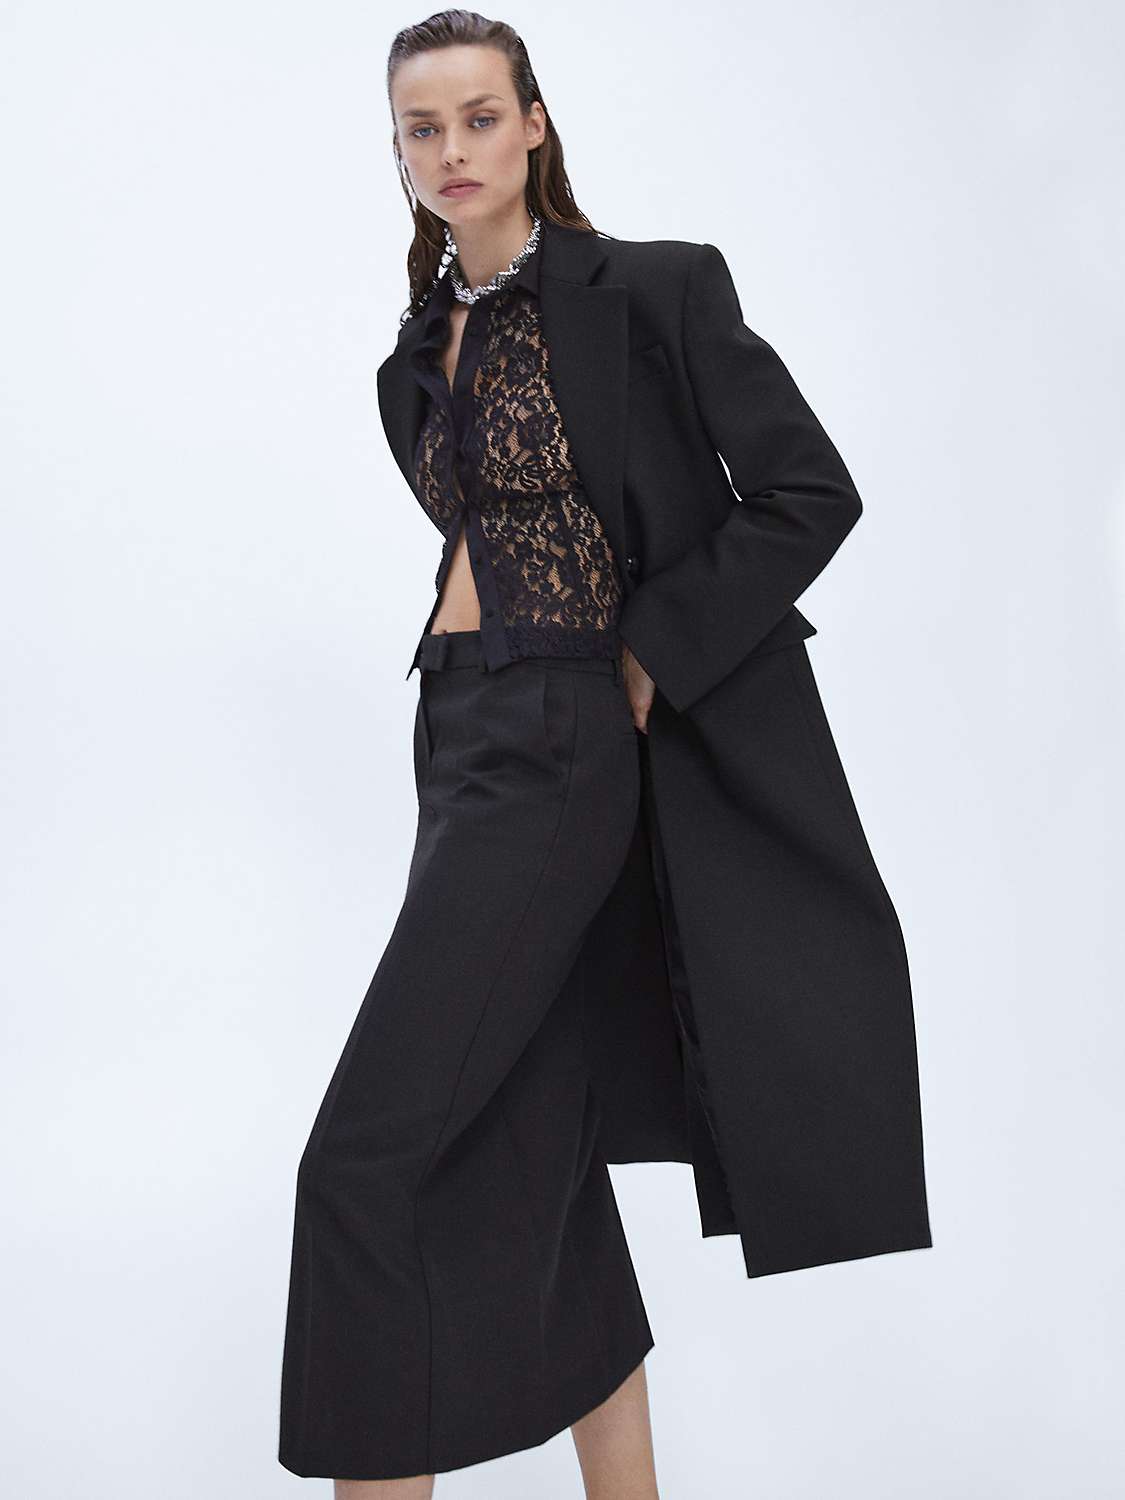 Mango Franca Pencil Wool Blend Skirt, Black at John Lewis & Partners